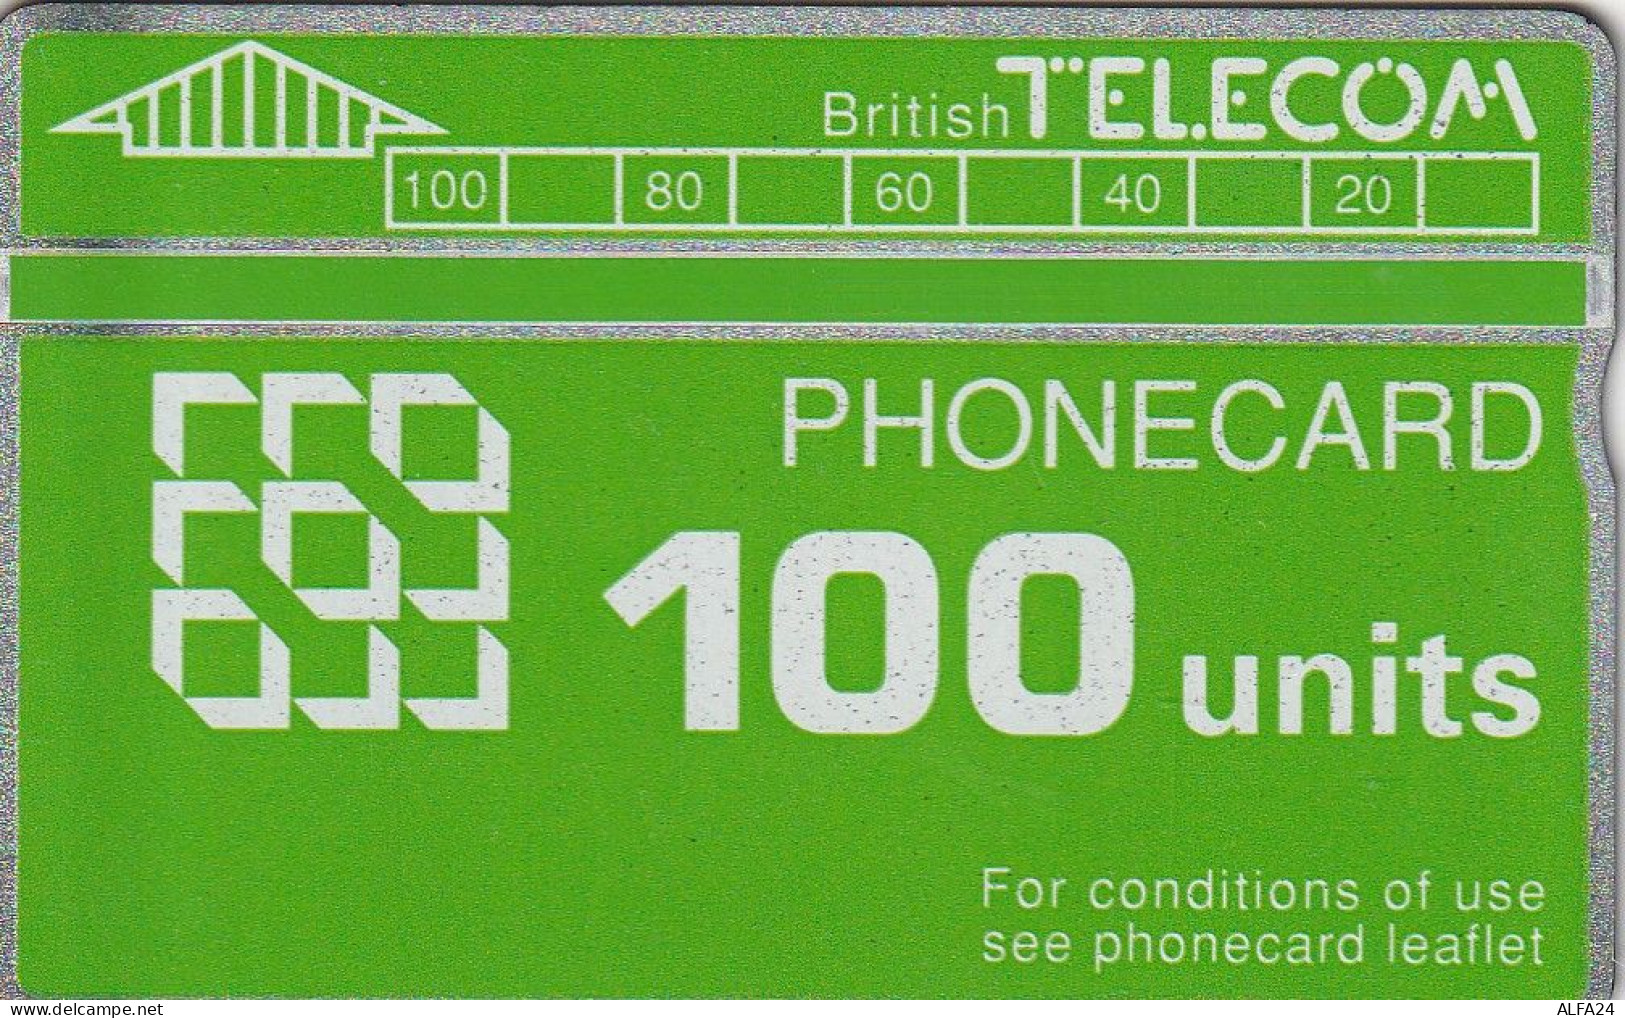 PHONE CARD UK LG (CZ1725 - BT General Issues